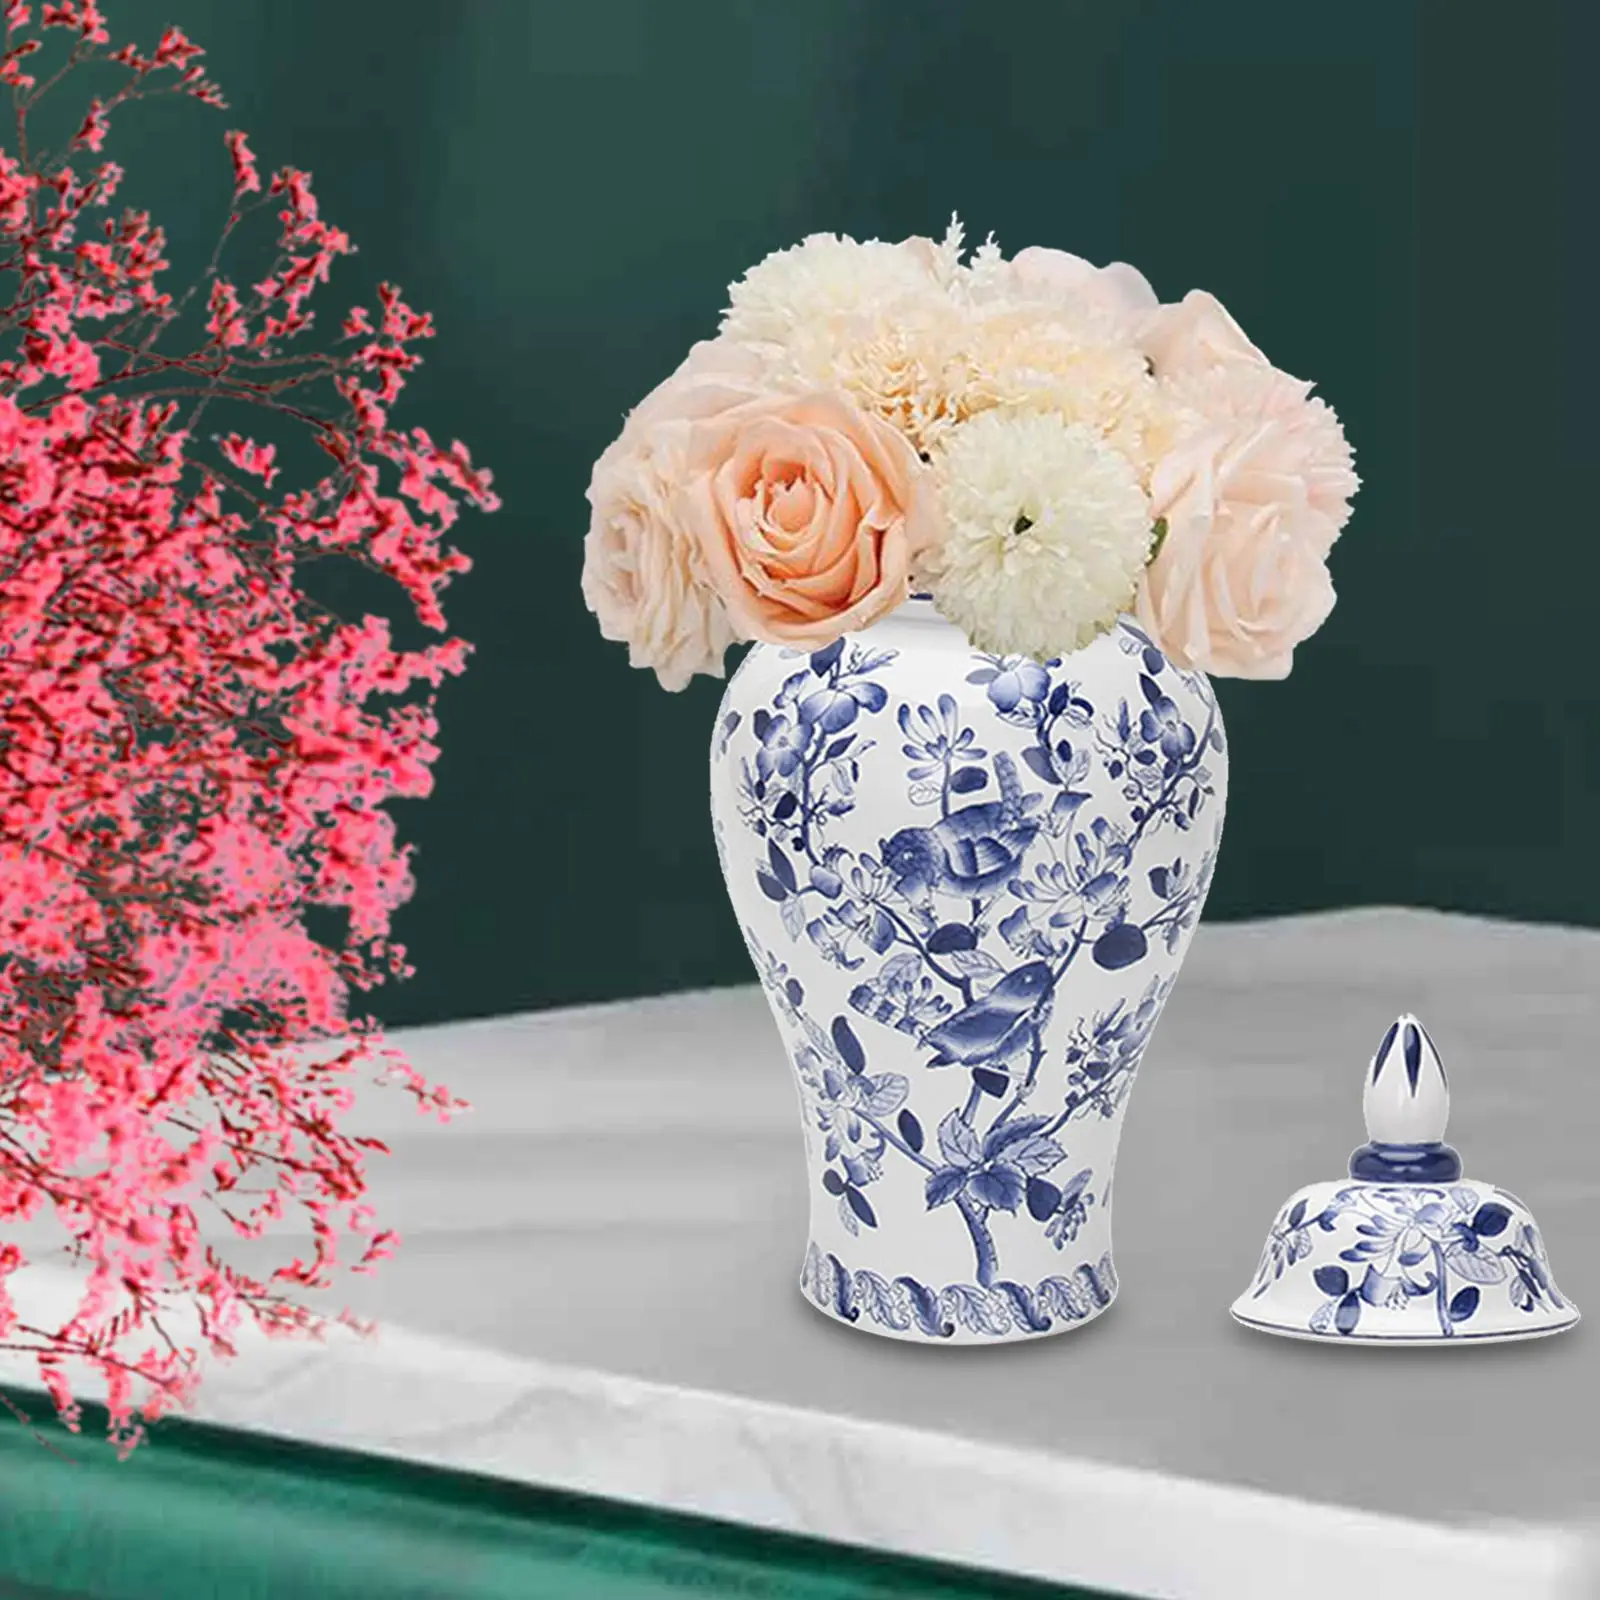 Chinese Ceramic Flower Vase Temple Jar Decorative Storage Jar Flower Pot Floral